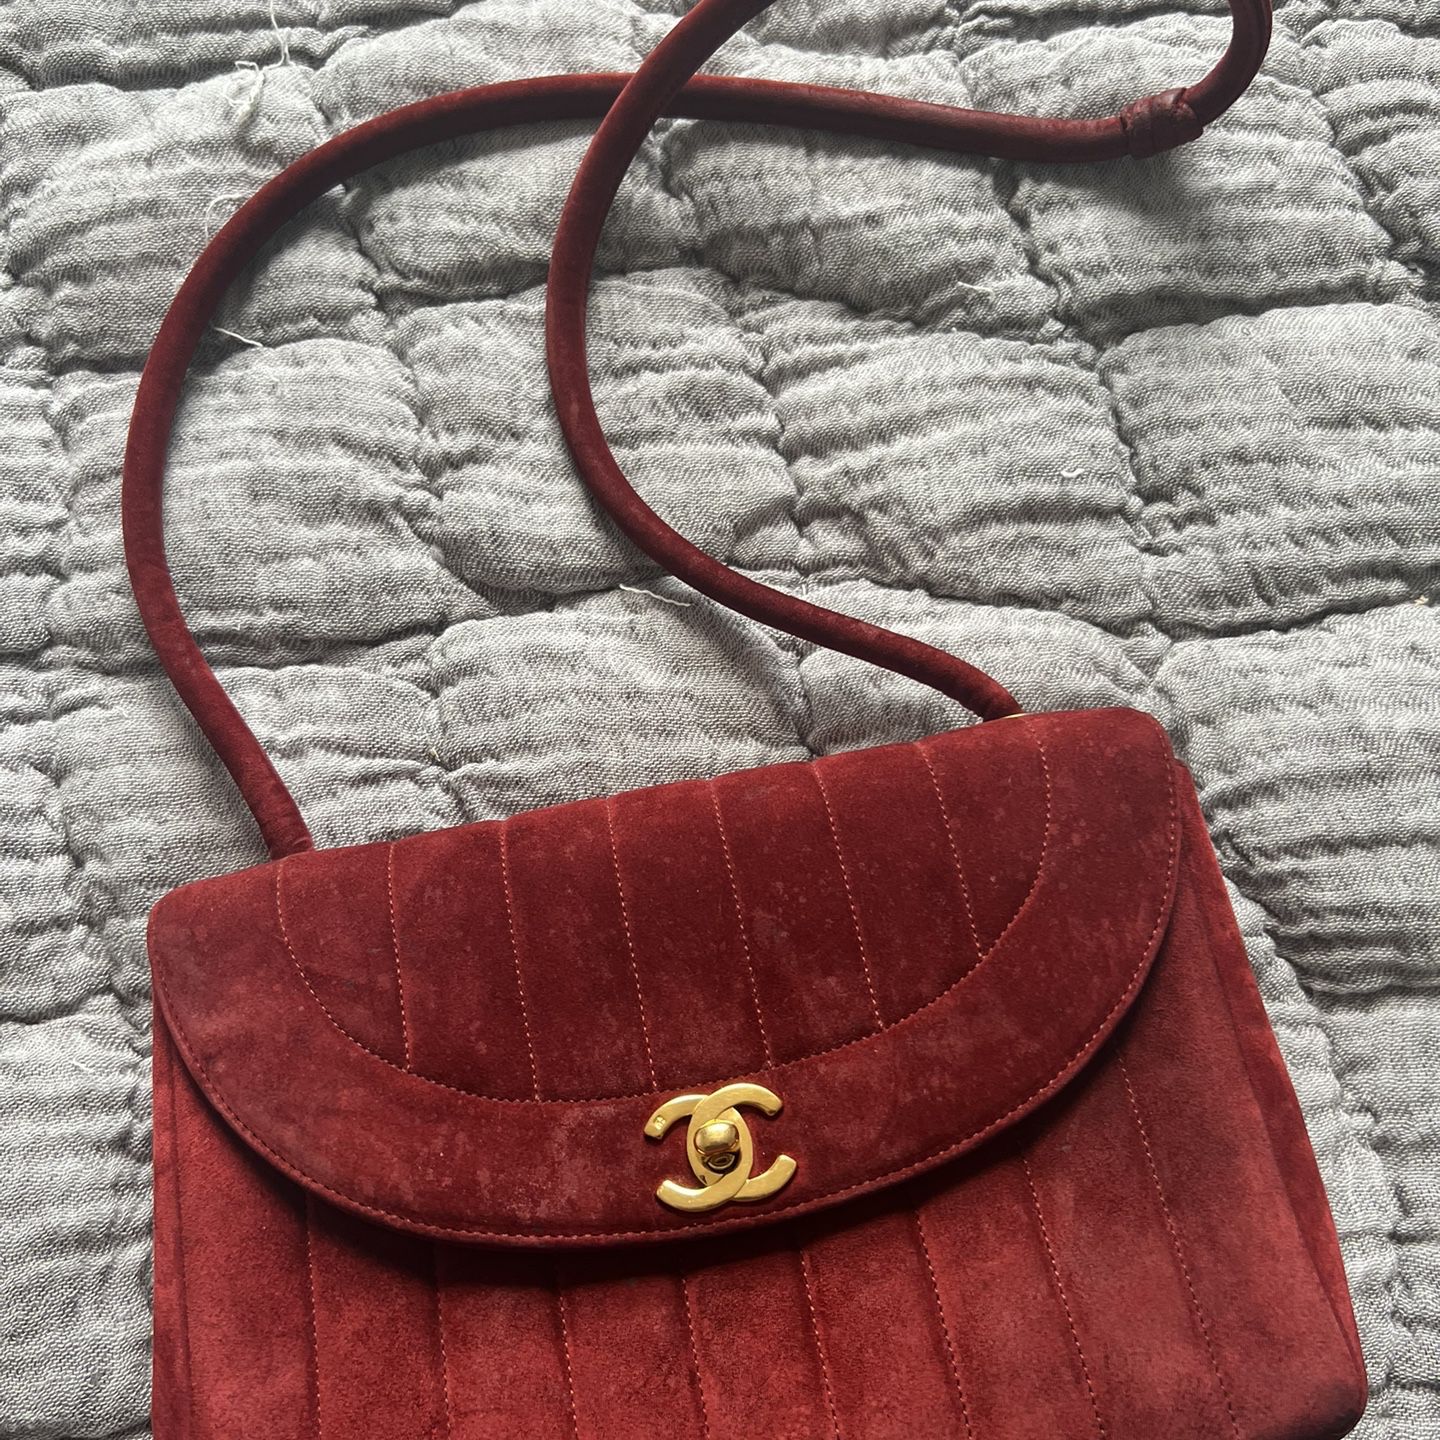 Vintage Chanel Suede Flap Bag for Sale in Eddington, PA - OfferUp